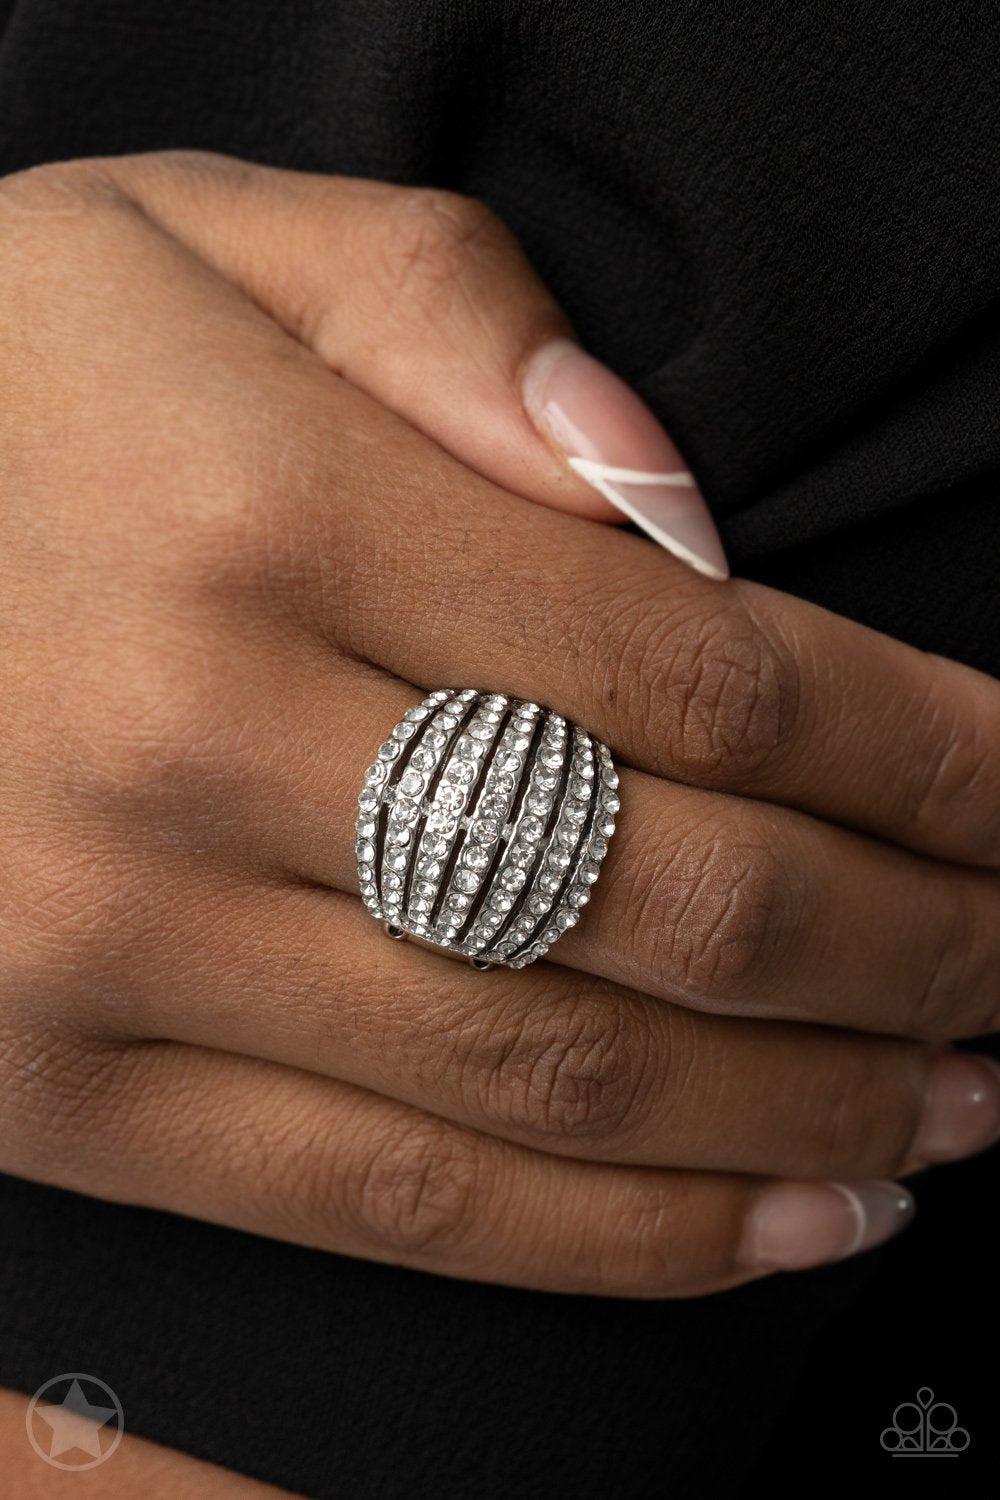 Blinding Brilliance White Rhinestone Ring - Paparazzi Accessories - lightbox -CarasShop.com - $5 Jewelry by Cara Jewels